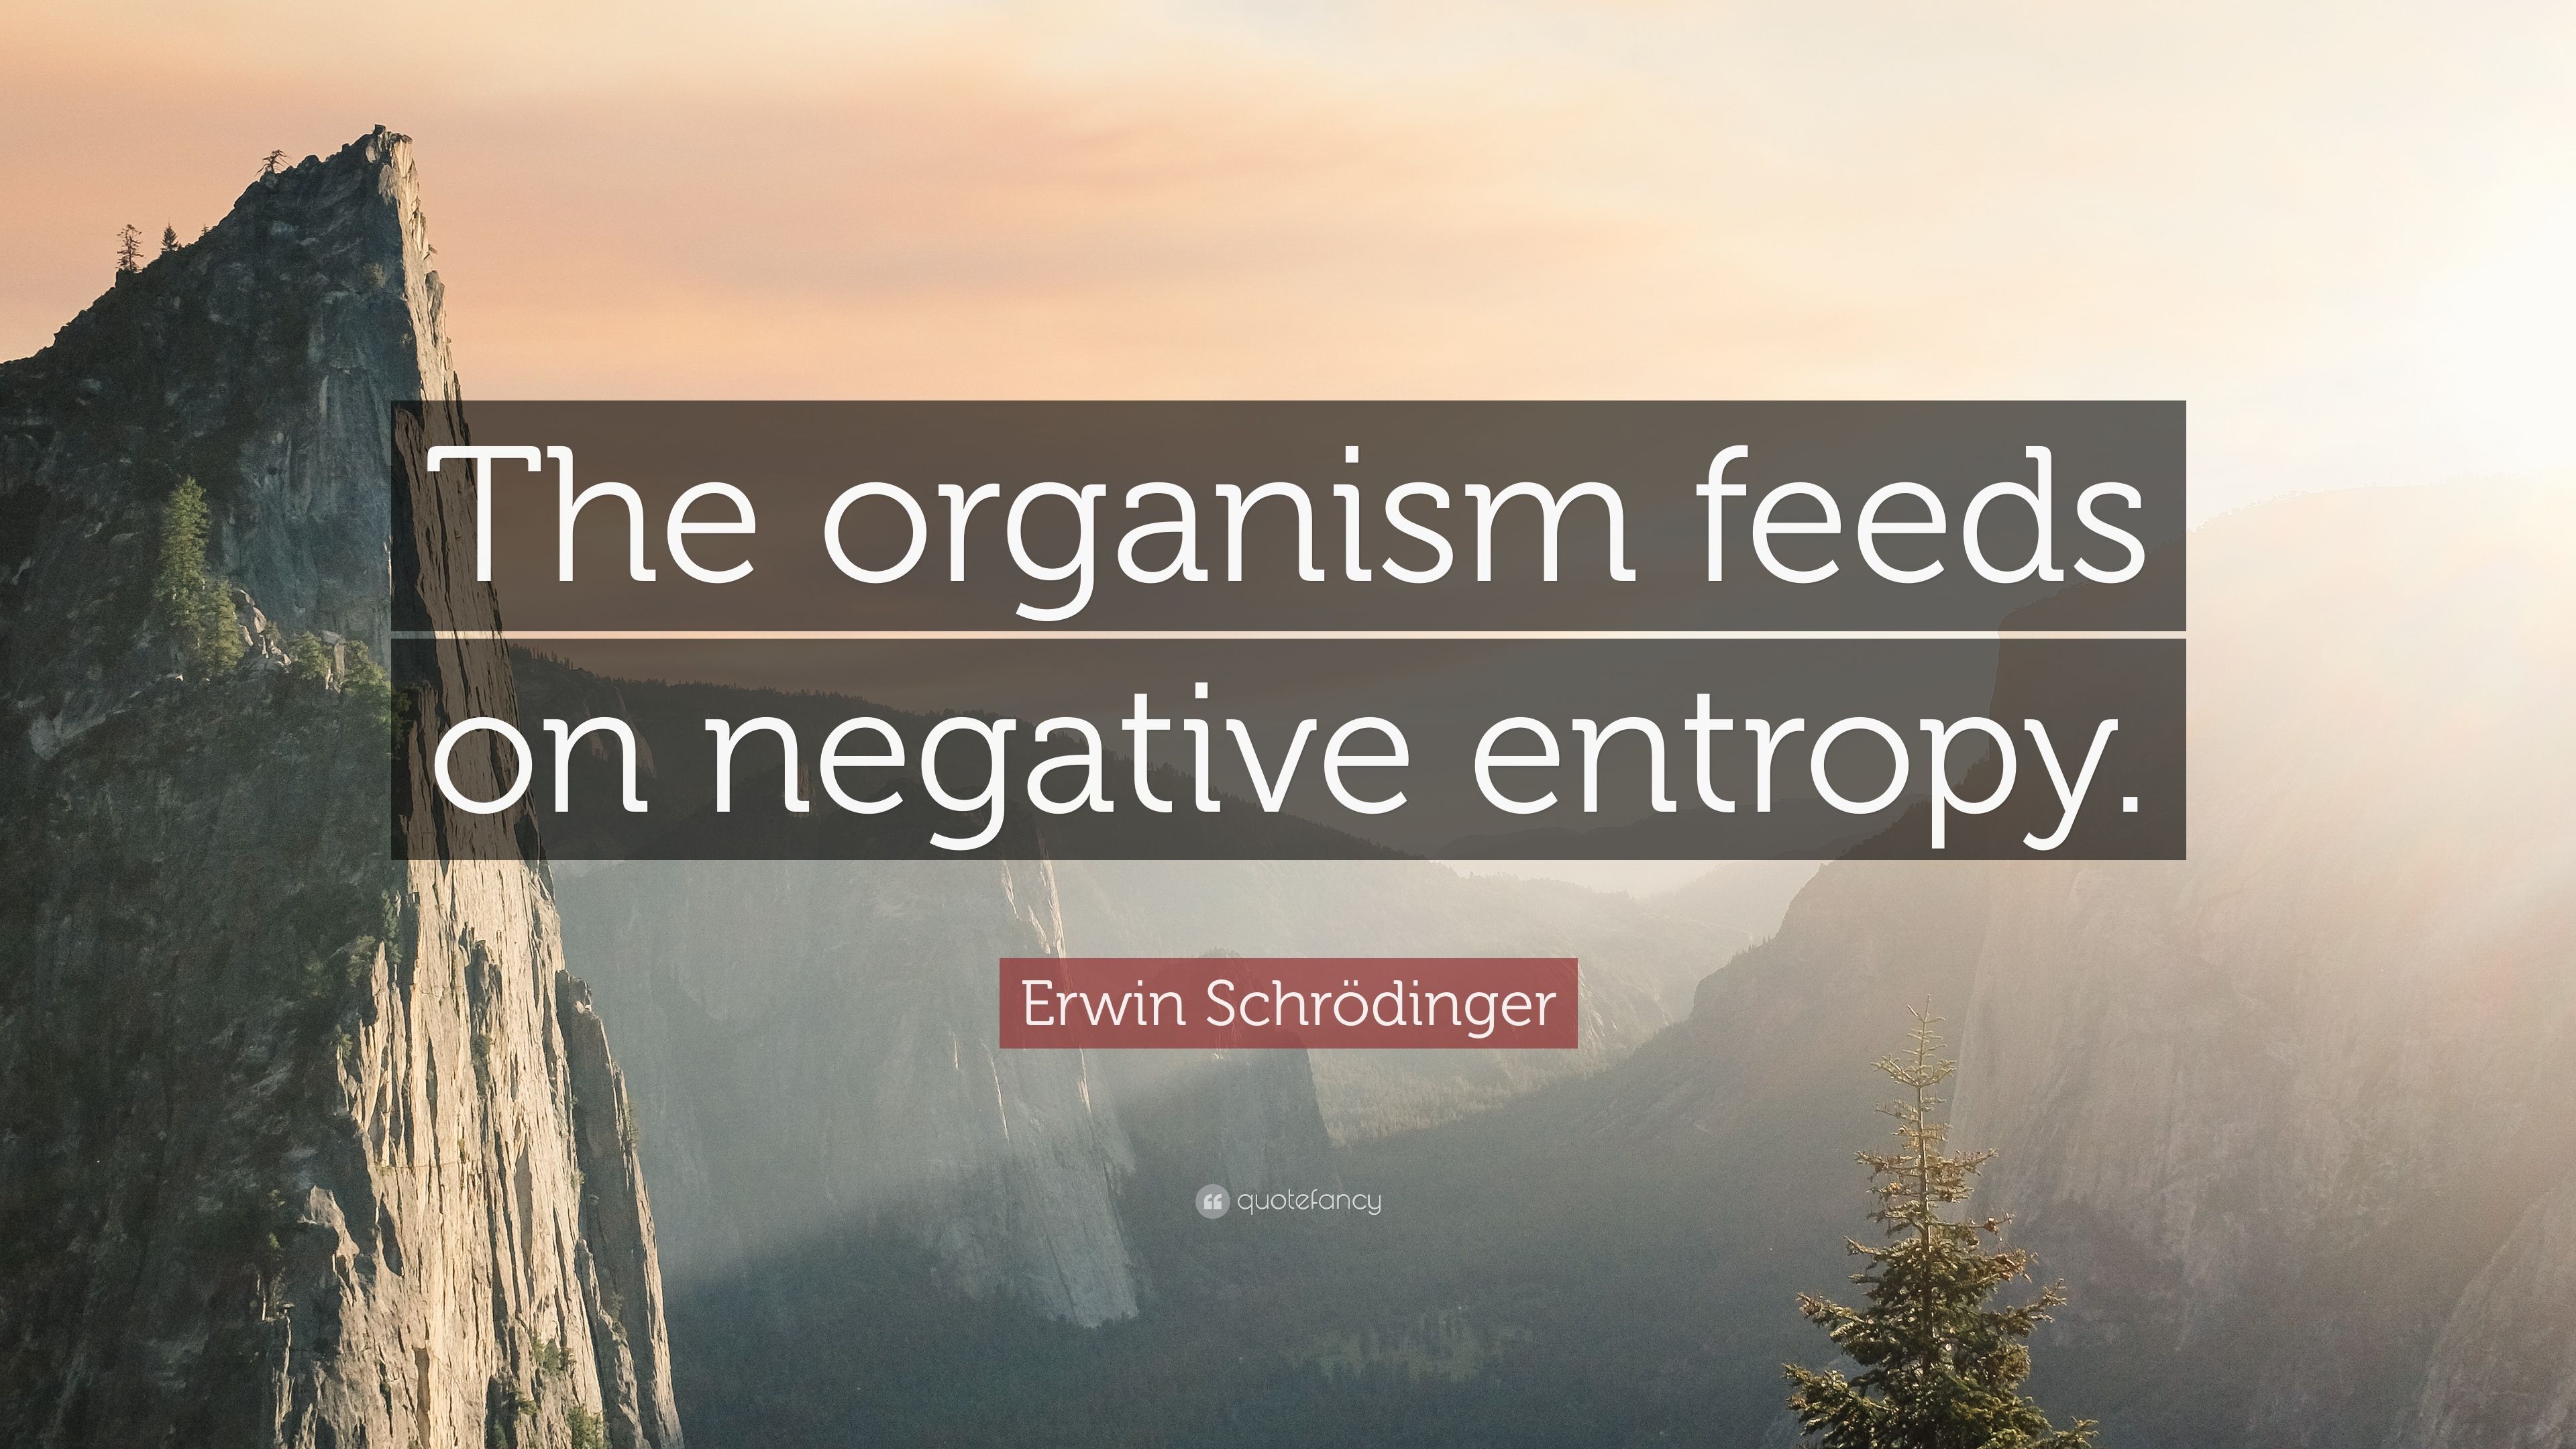 organism feeds on negative entropy .quotefancy.com